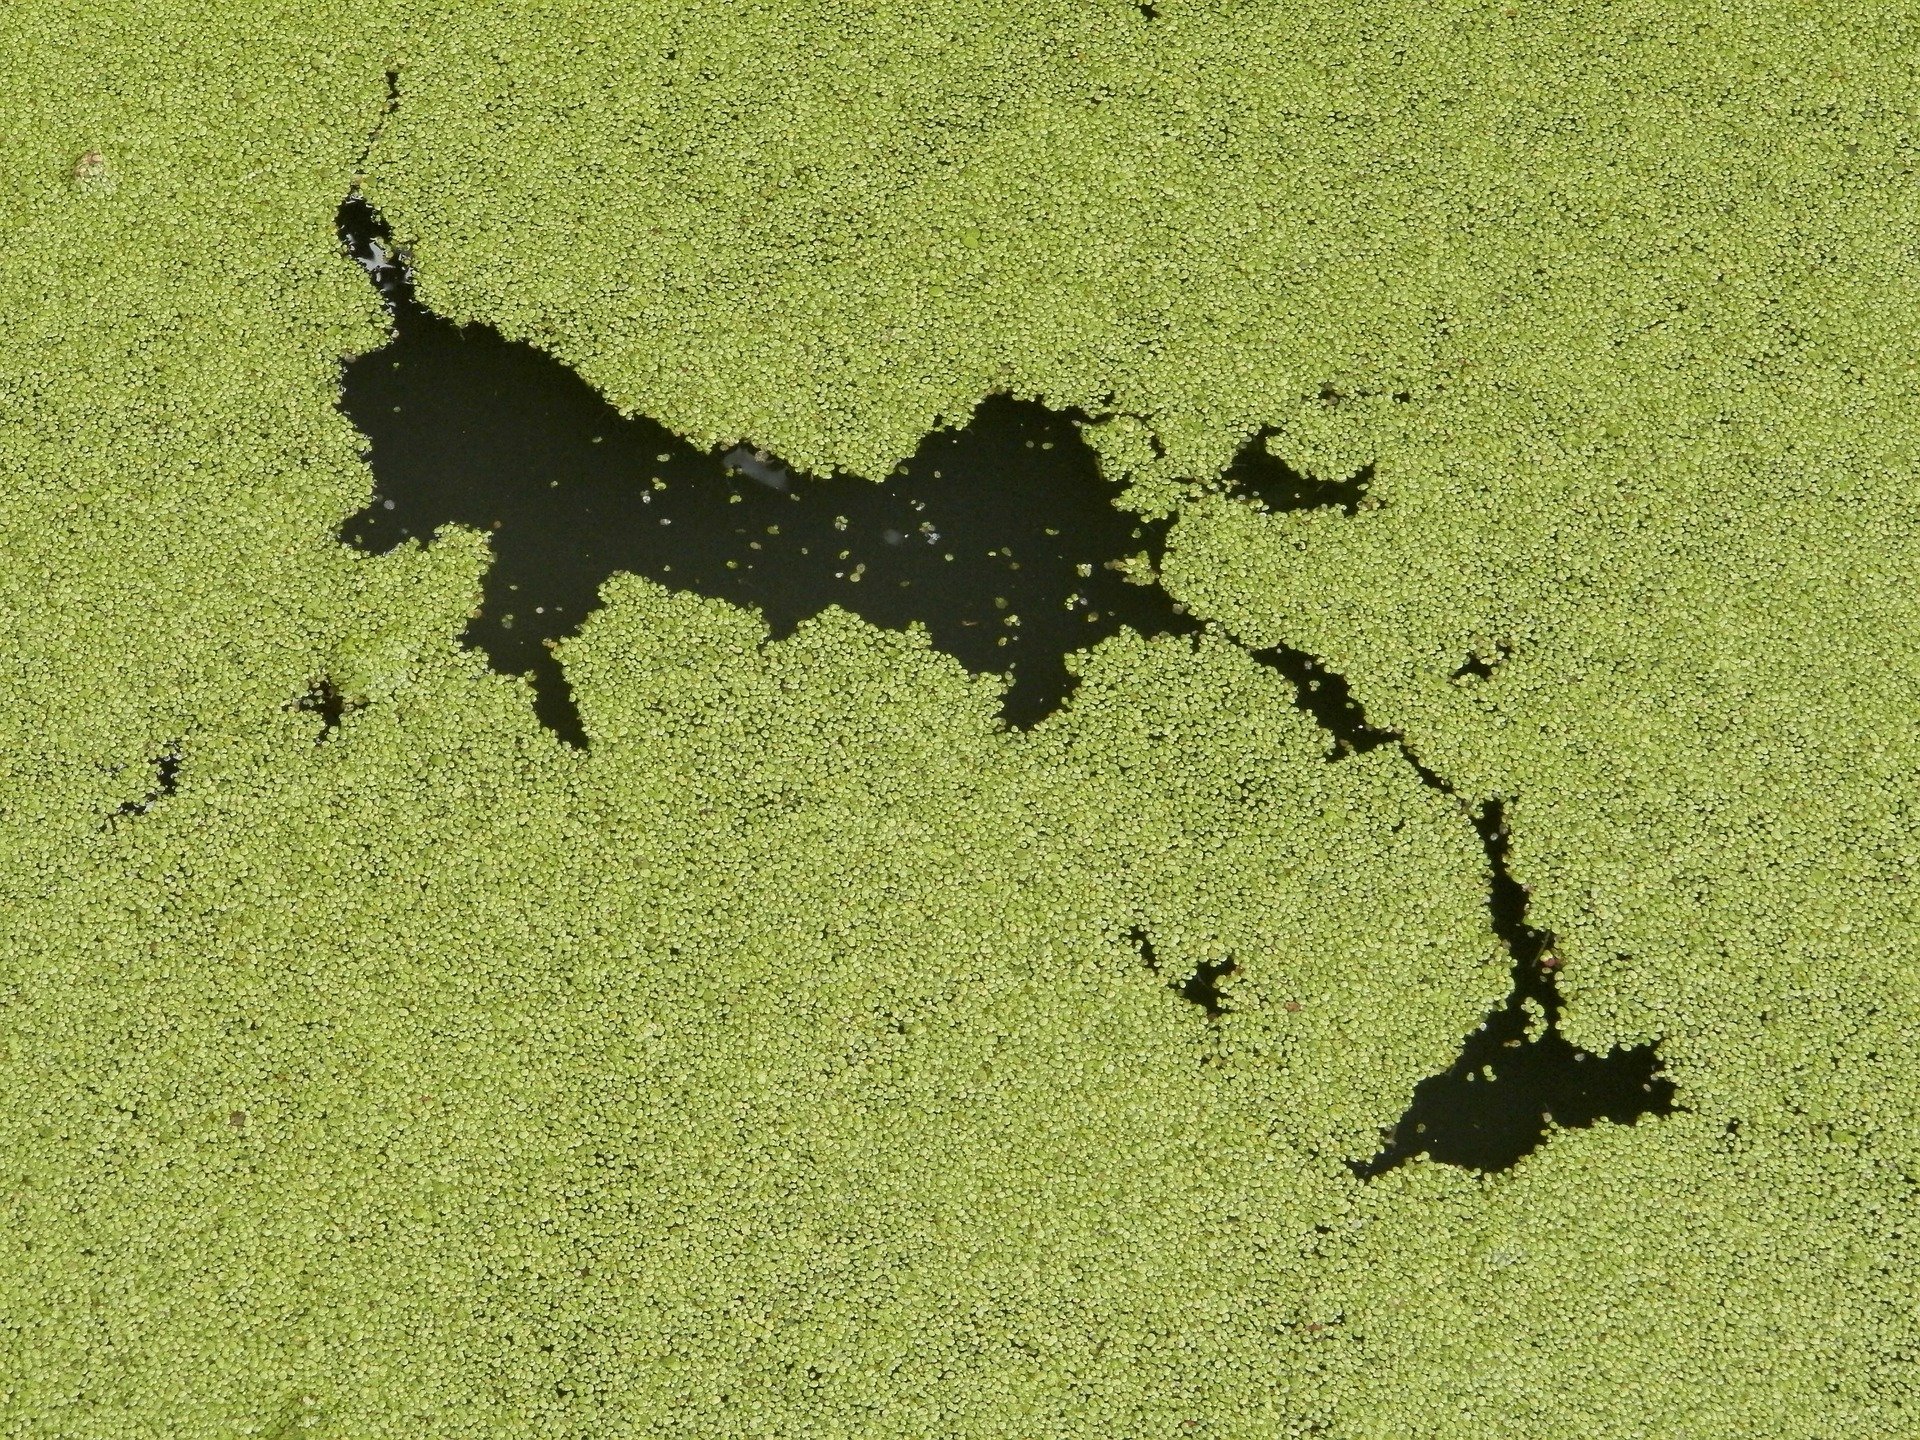 Toxic Algae Increases in Florida's Lake Okeechobee